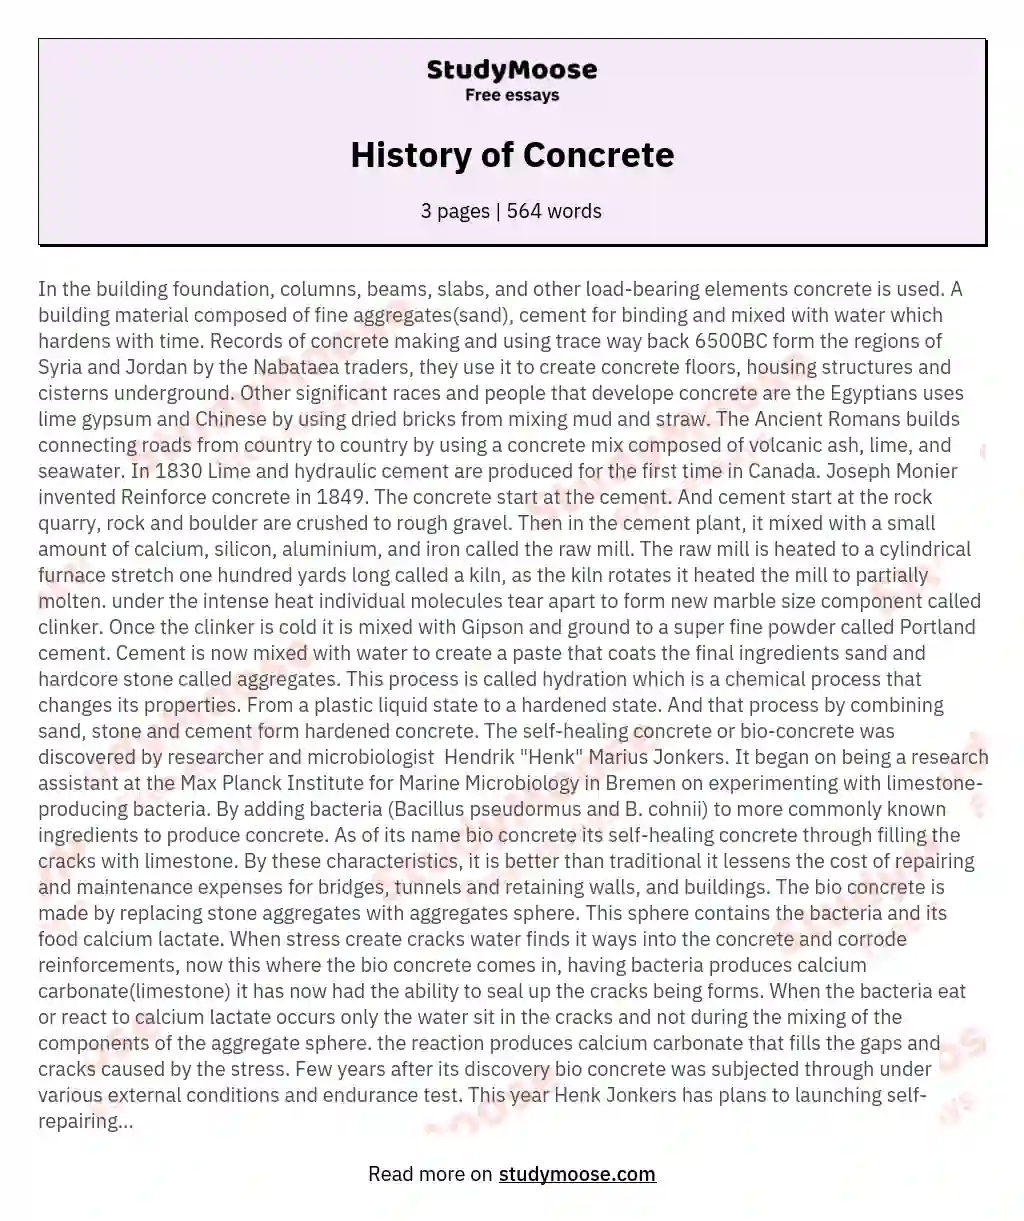 History of Concrete essay